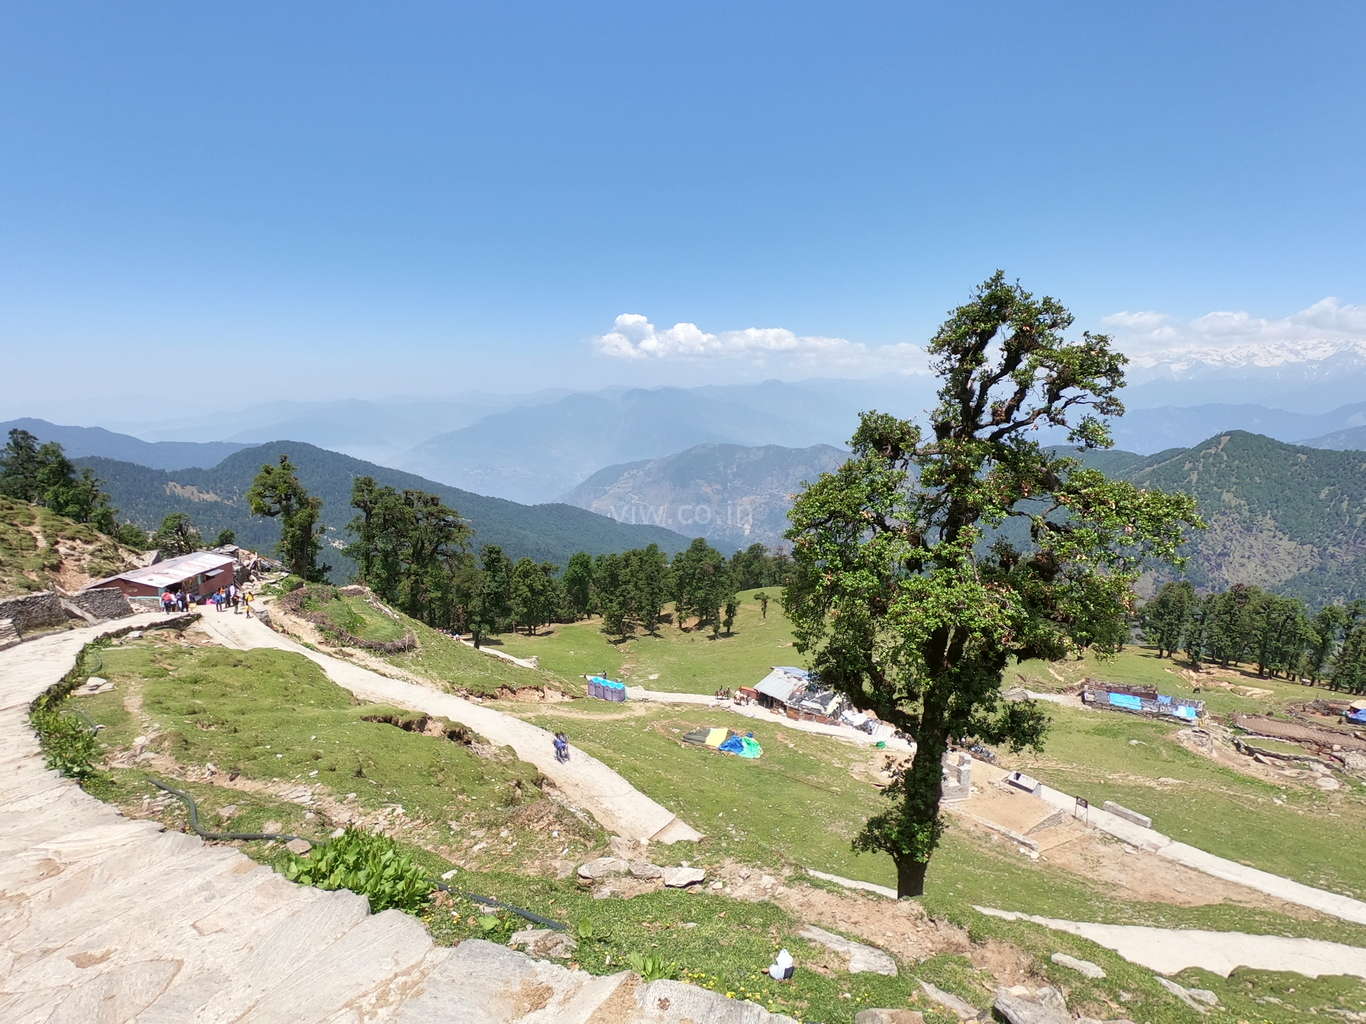 Beautiful landscape of trek to tungnath temple in uttarakhand